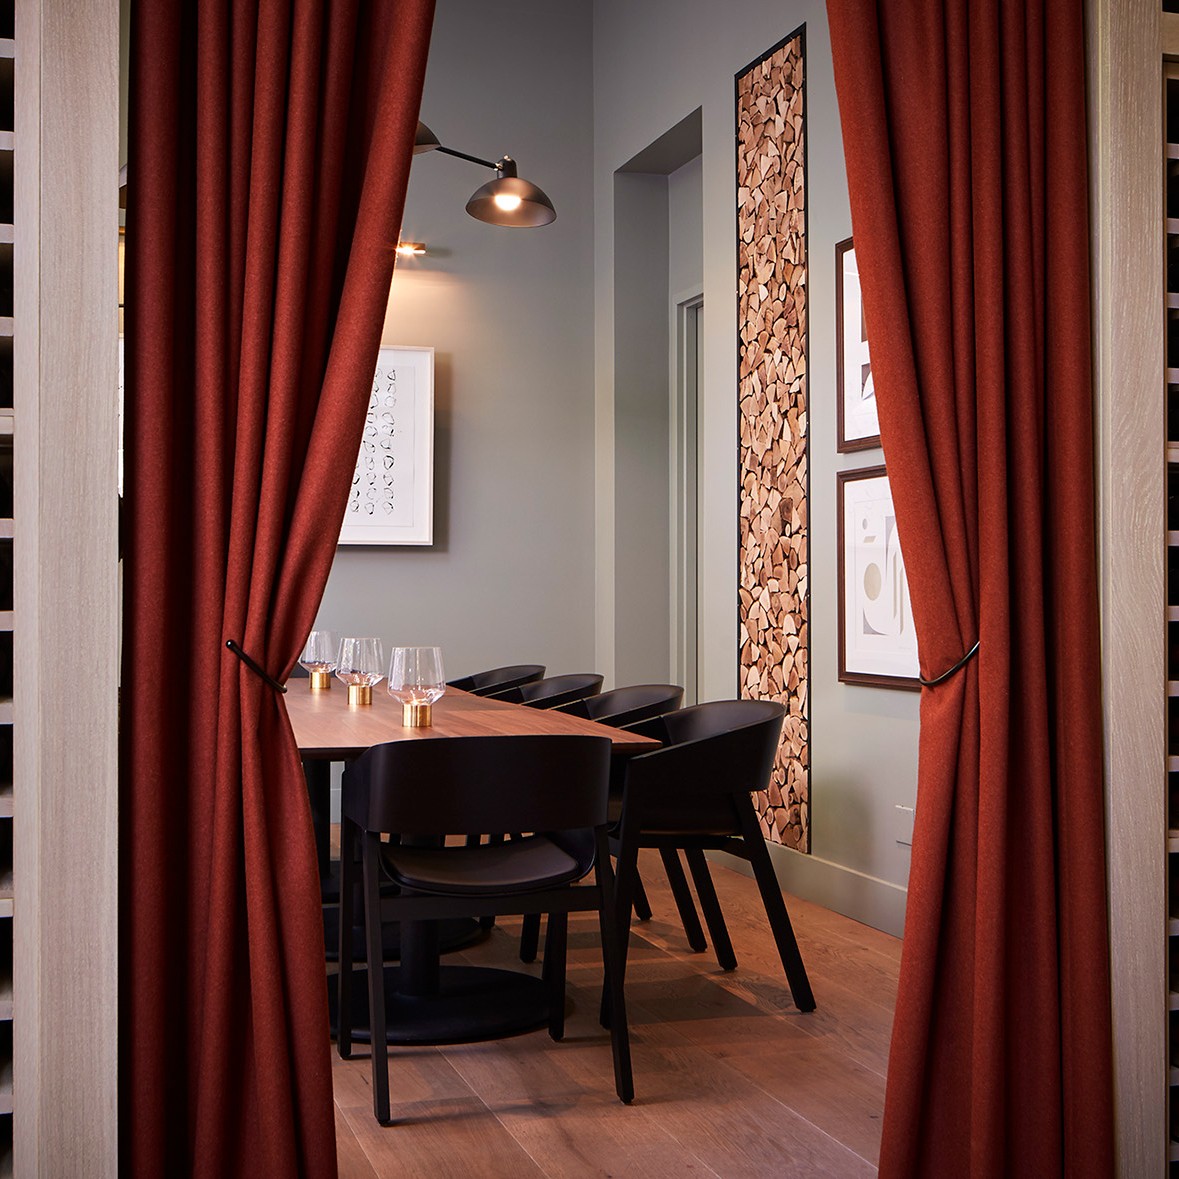 Inside Proxi Chicago Premium Lounge and Restaurant